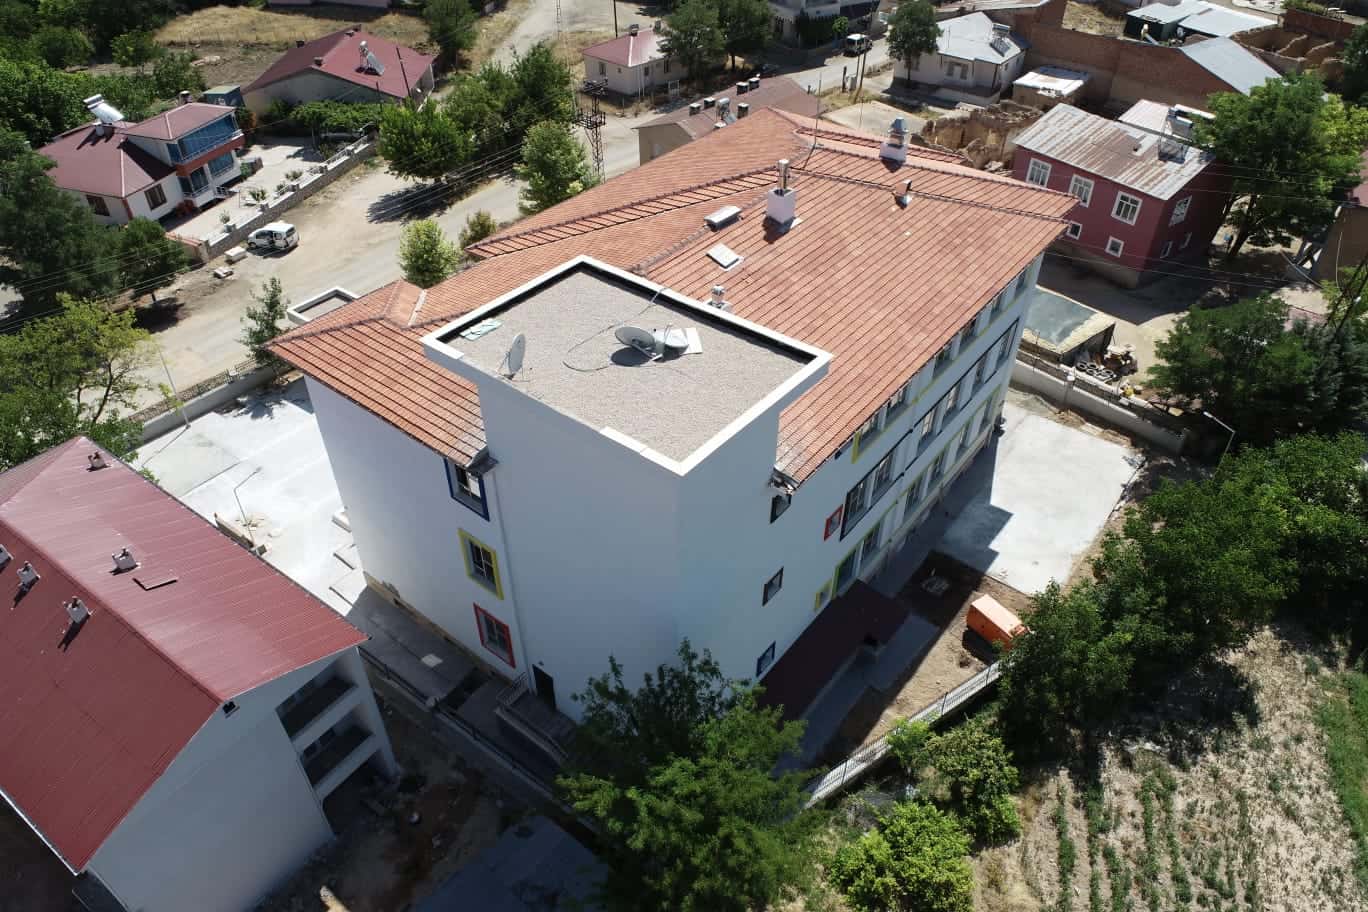 ELAZIĞ SCHOOL CONSTRUCTIONS